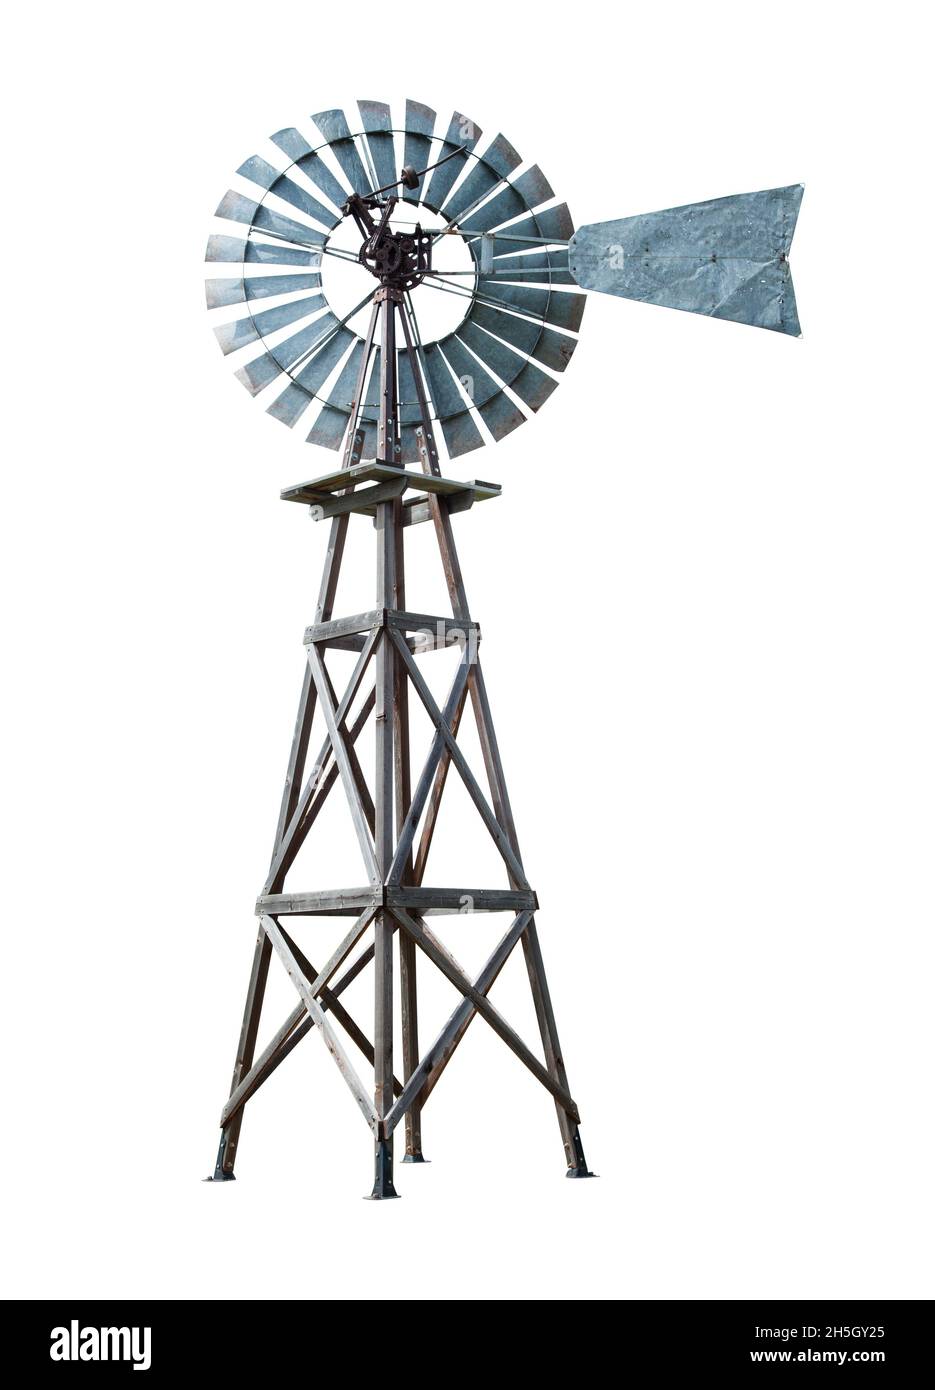 Old Farm Windmill Water Pump Turbine Cut Out on White. Stockfoto